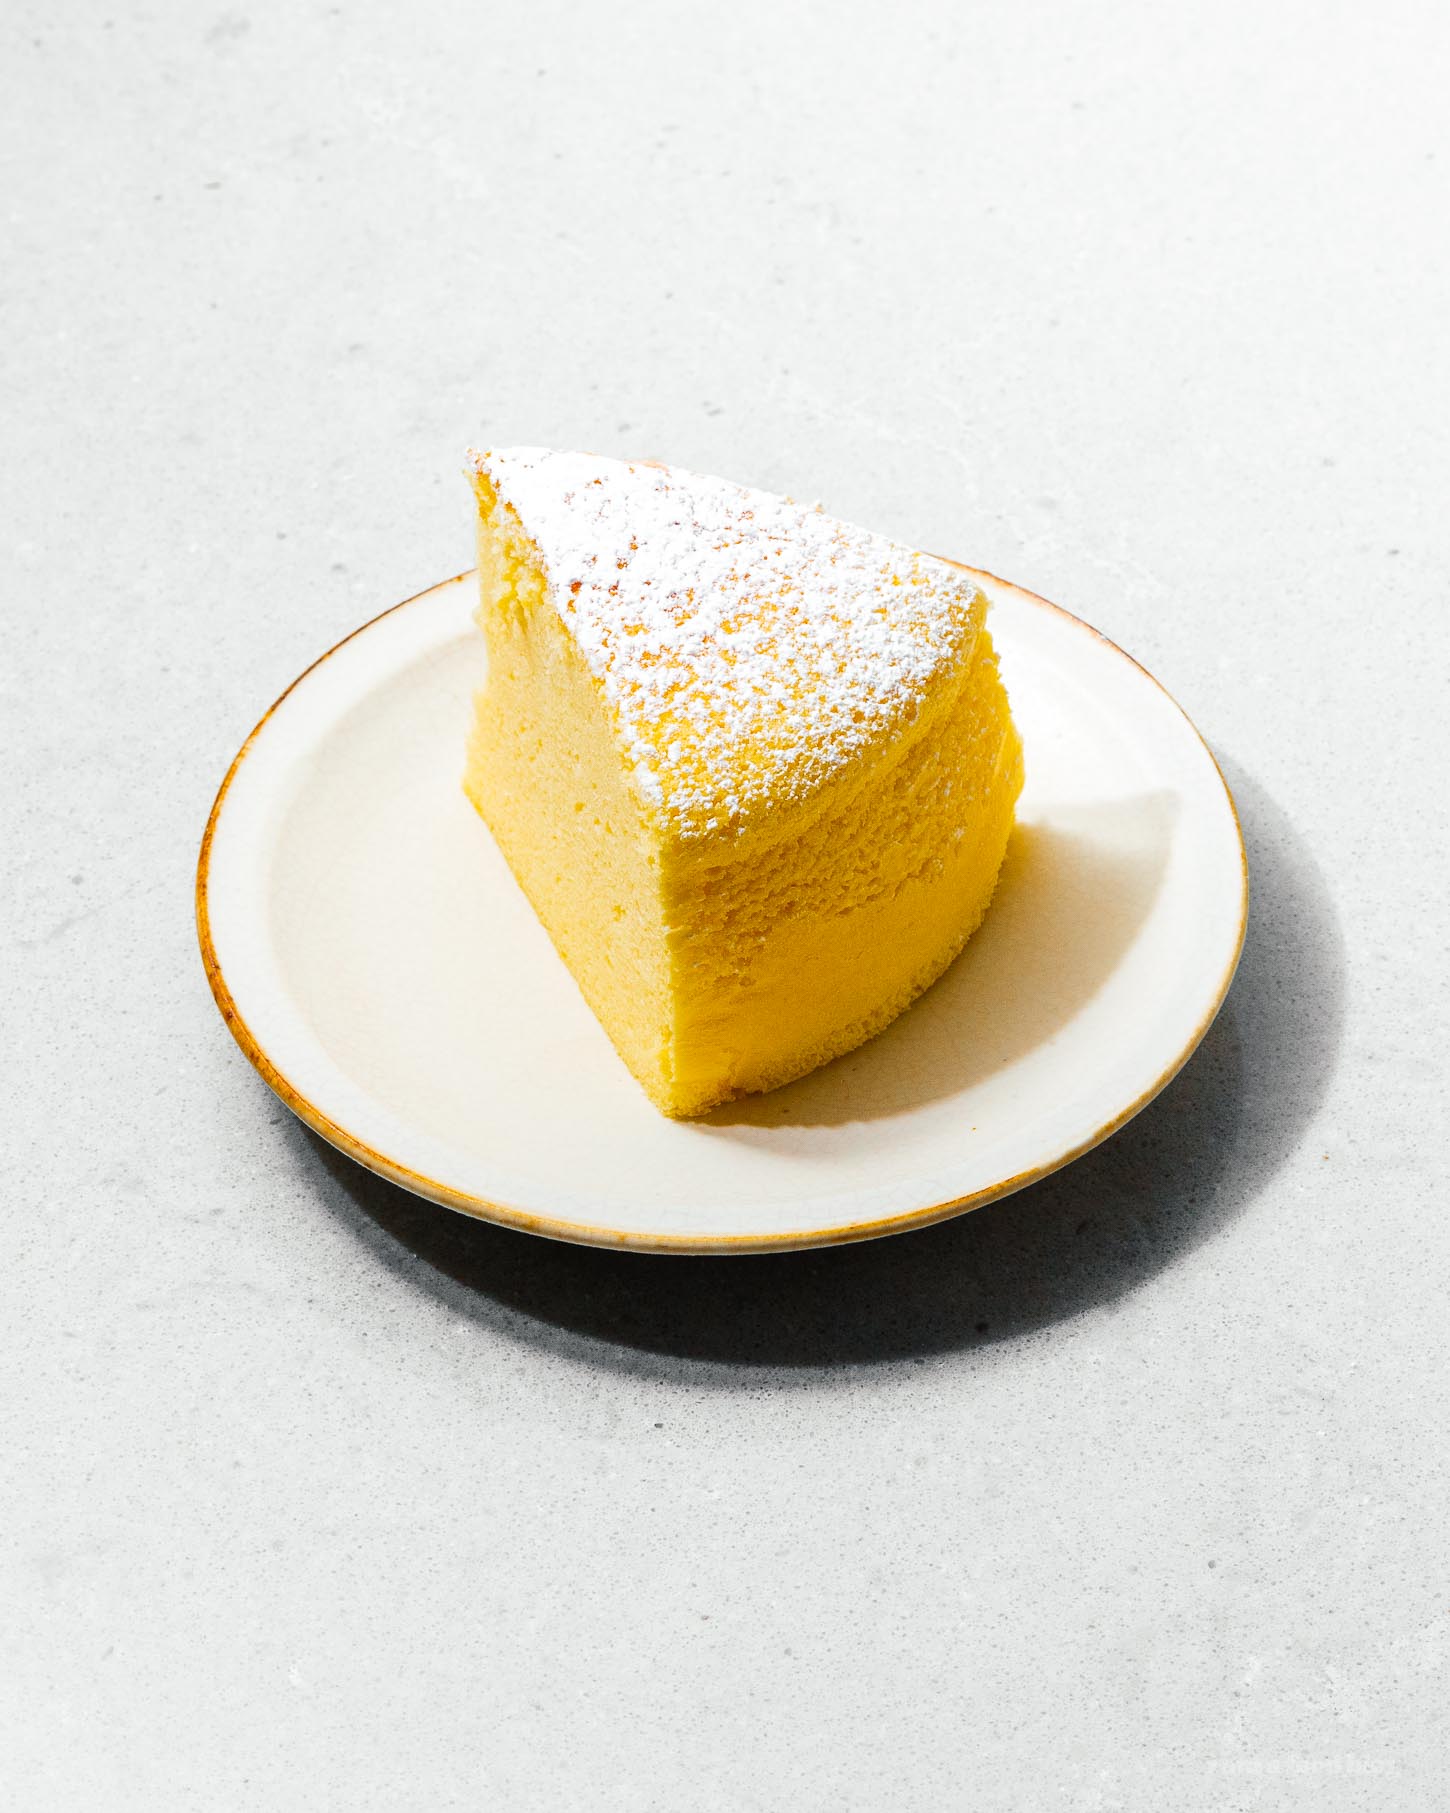 Small Batch Japanese Cheesecake Recipe | www.iamafoodblog.com